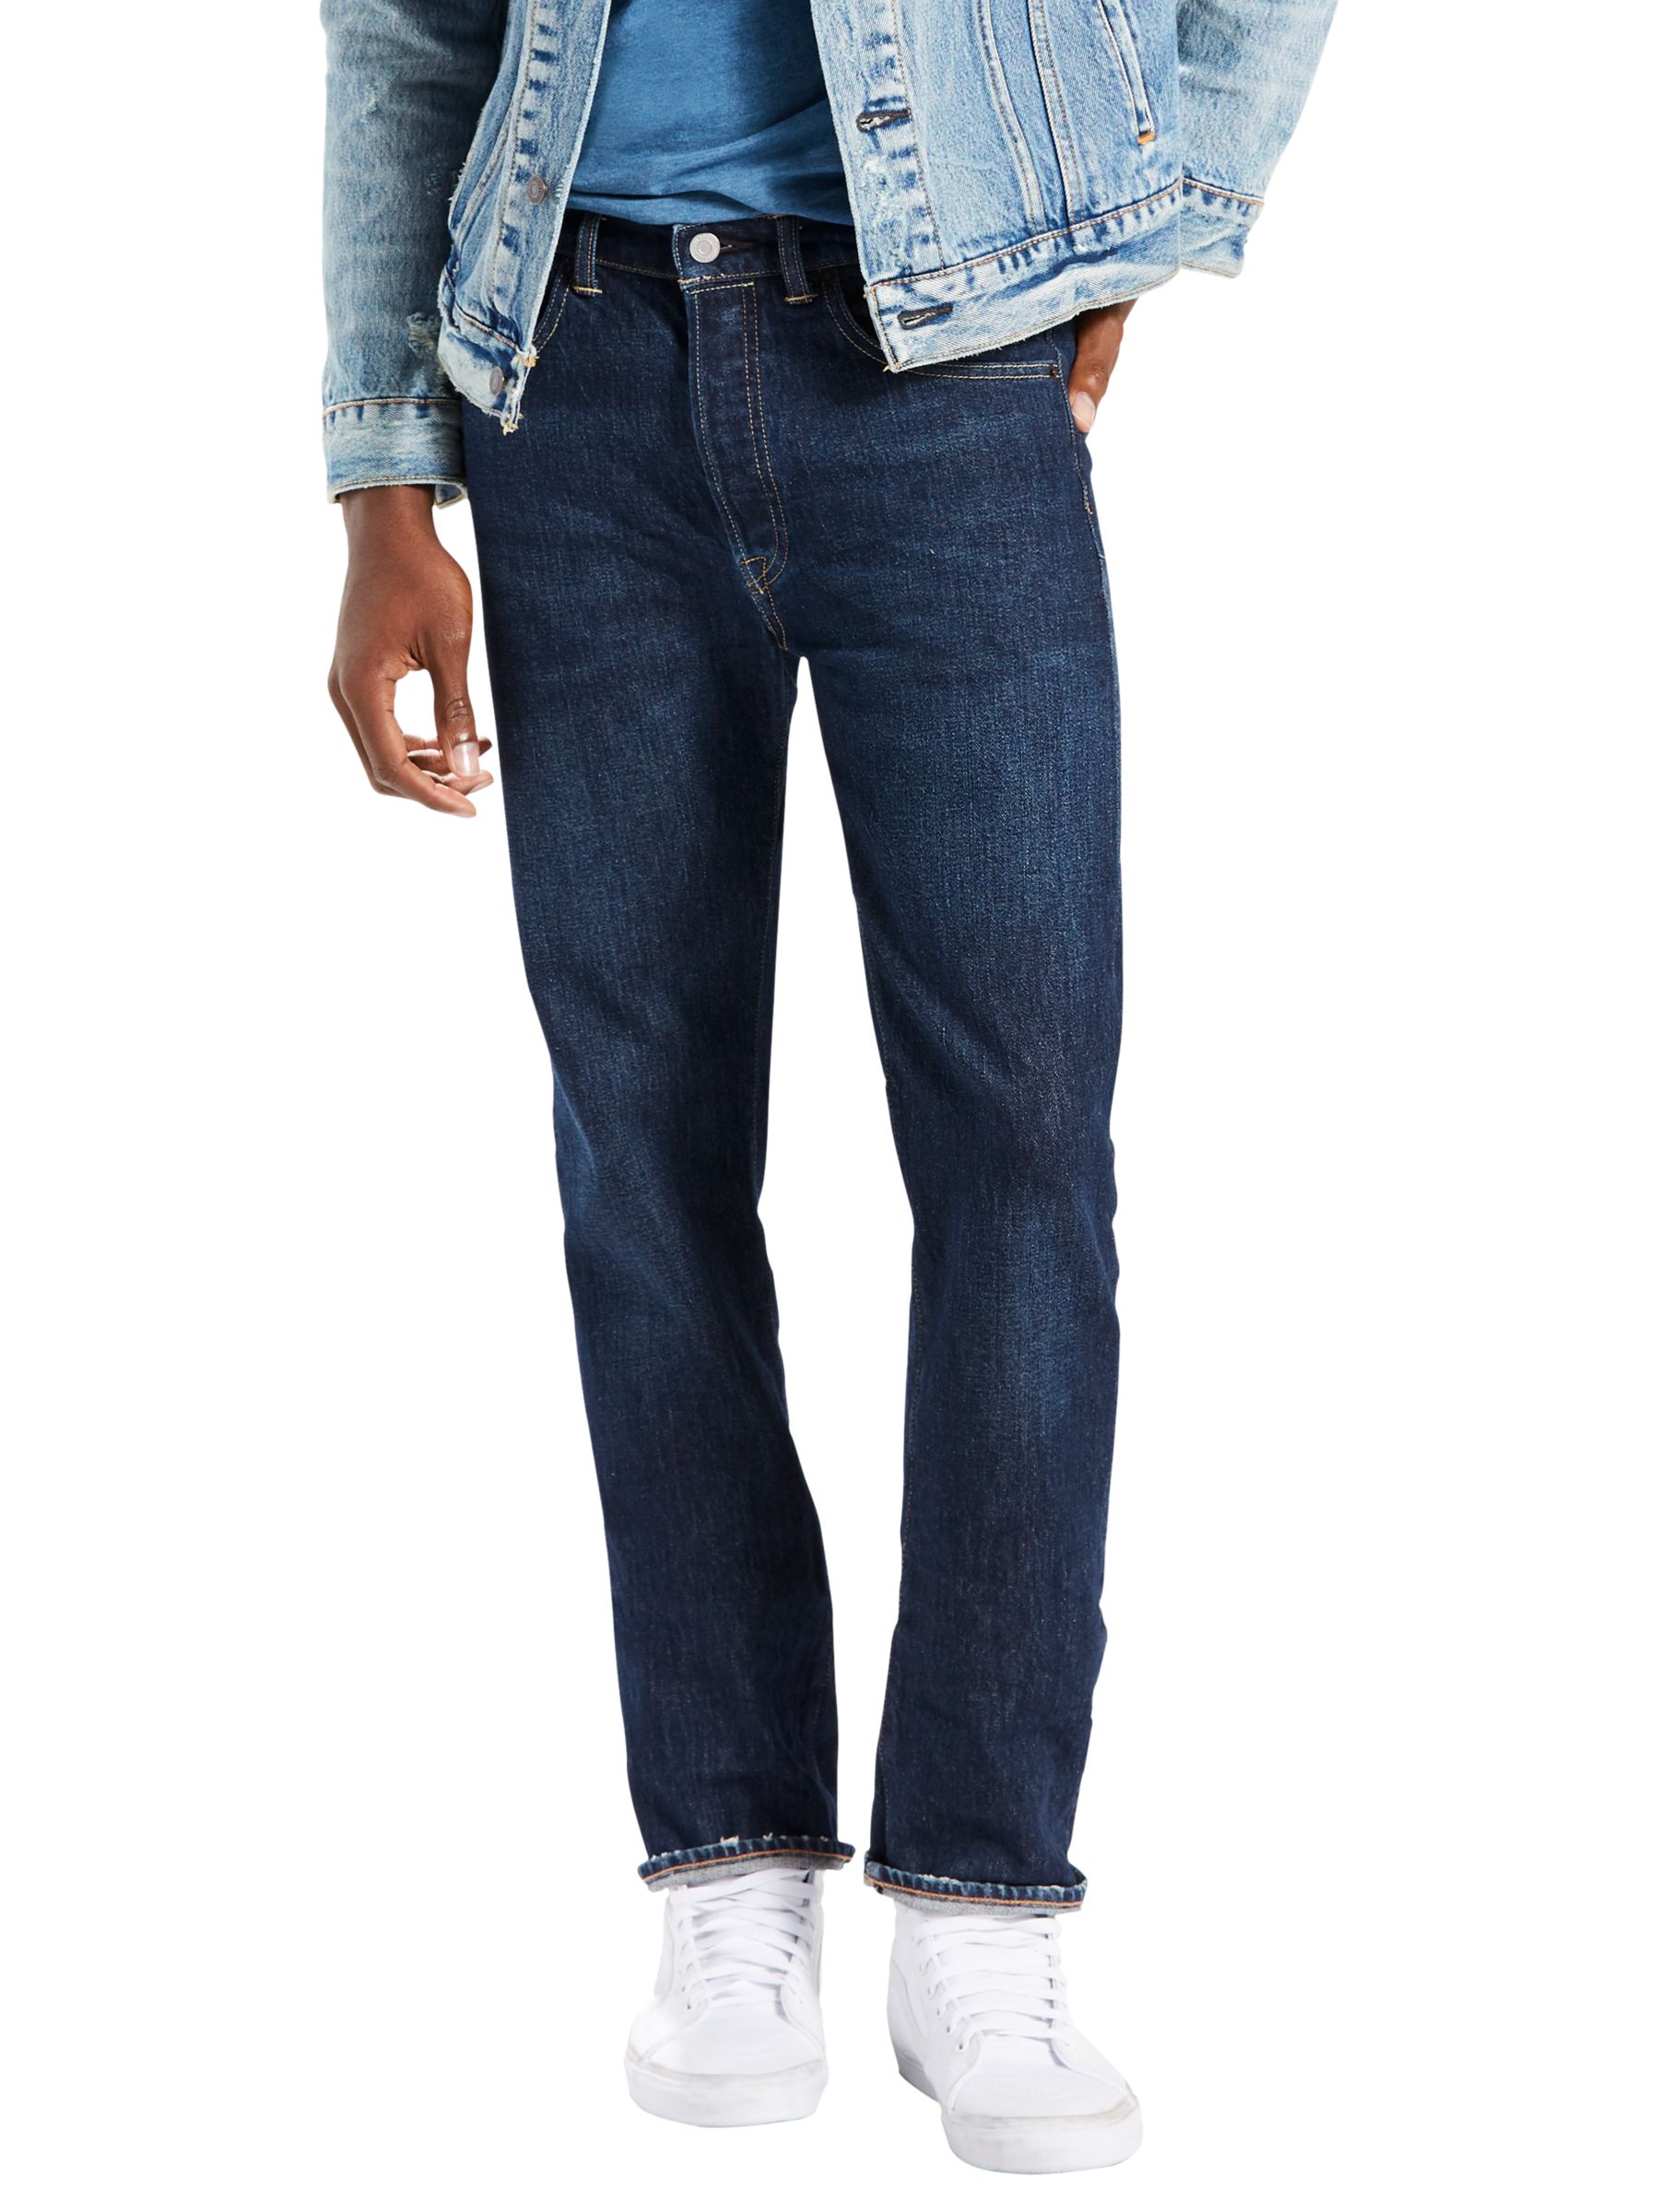 Levi's 501 Trucker Original Straight Jeans, Indigo at John Lewis & Partners